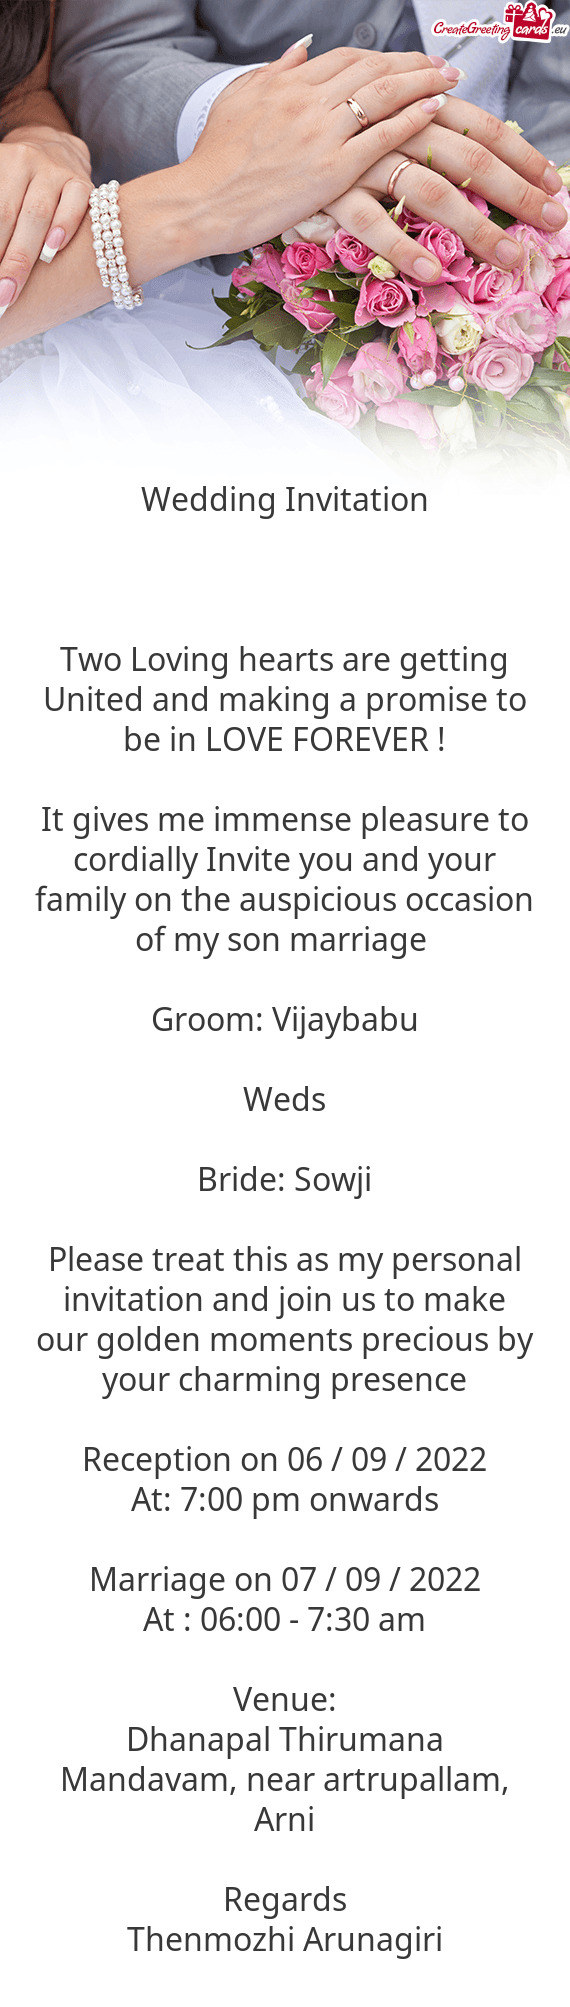 Bride: Sowji